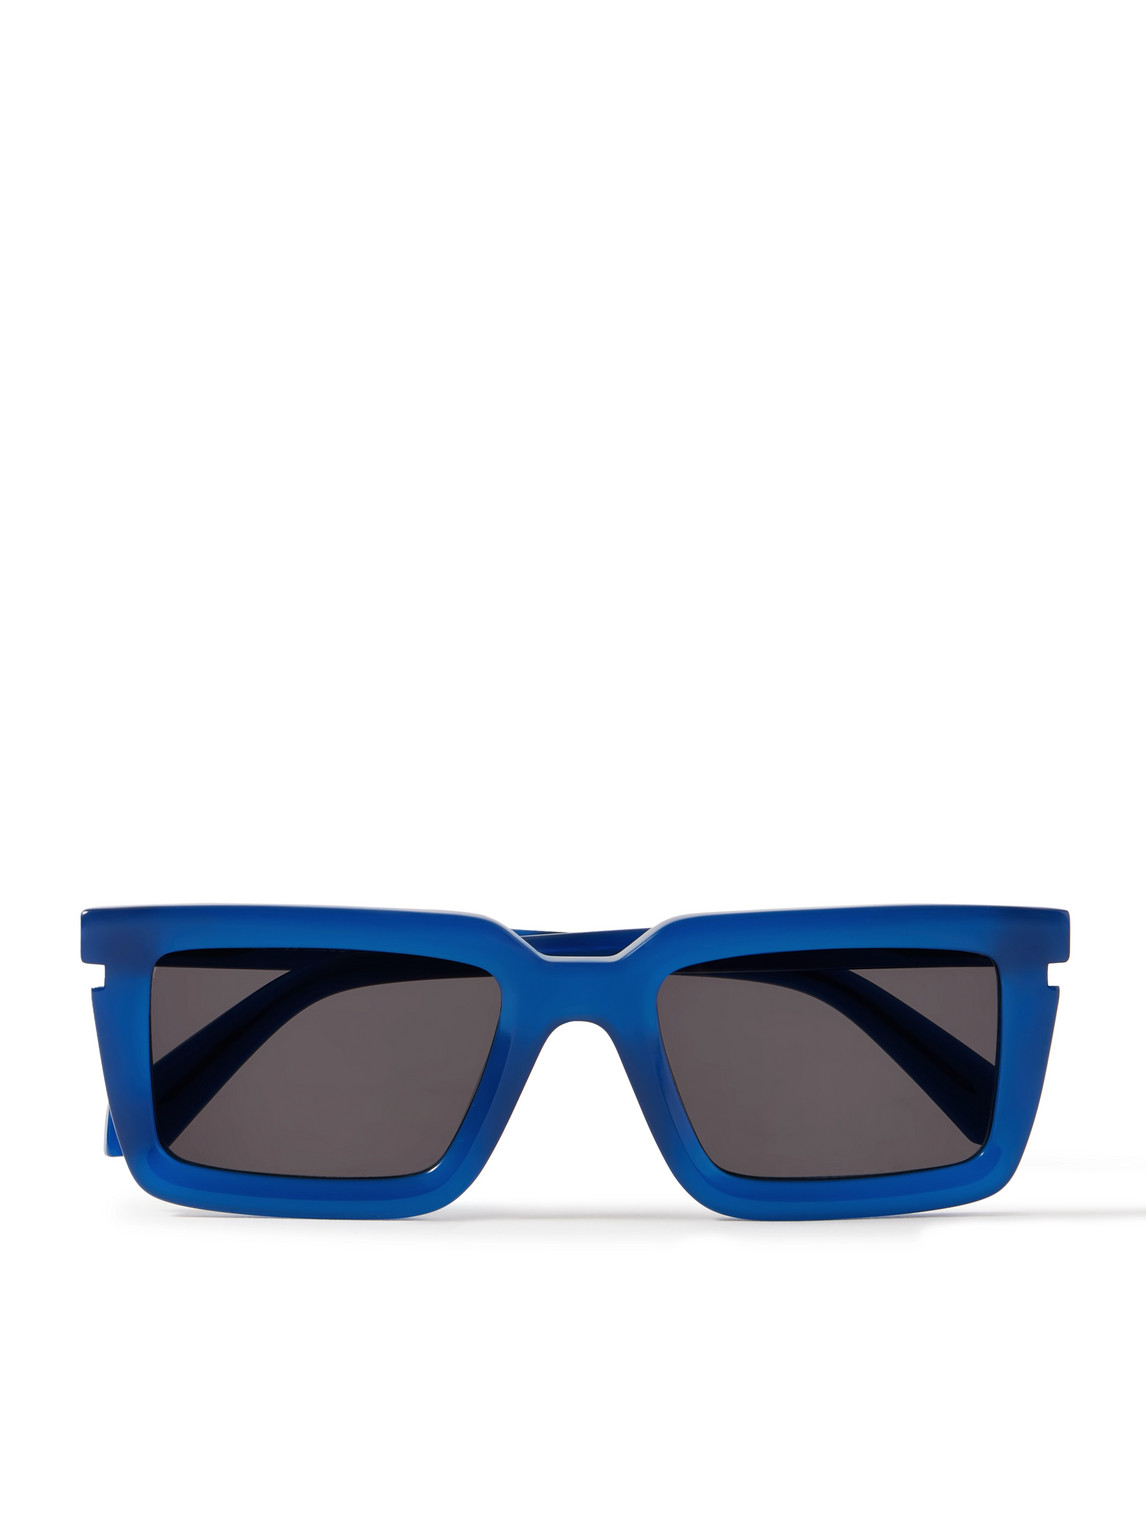 Off-White - Tucson Square-Frame Acetate Sunglasses - Men - Blue von Off-White